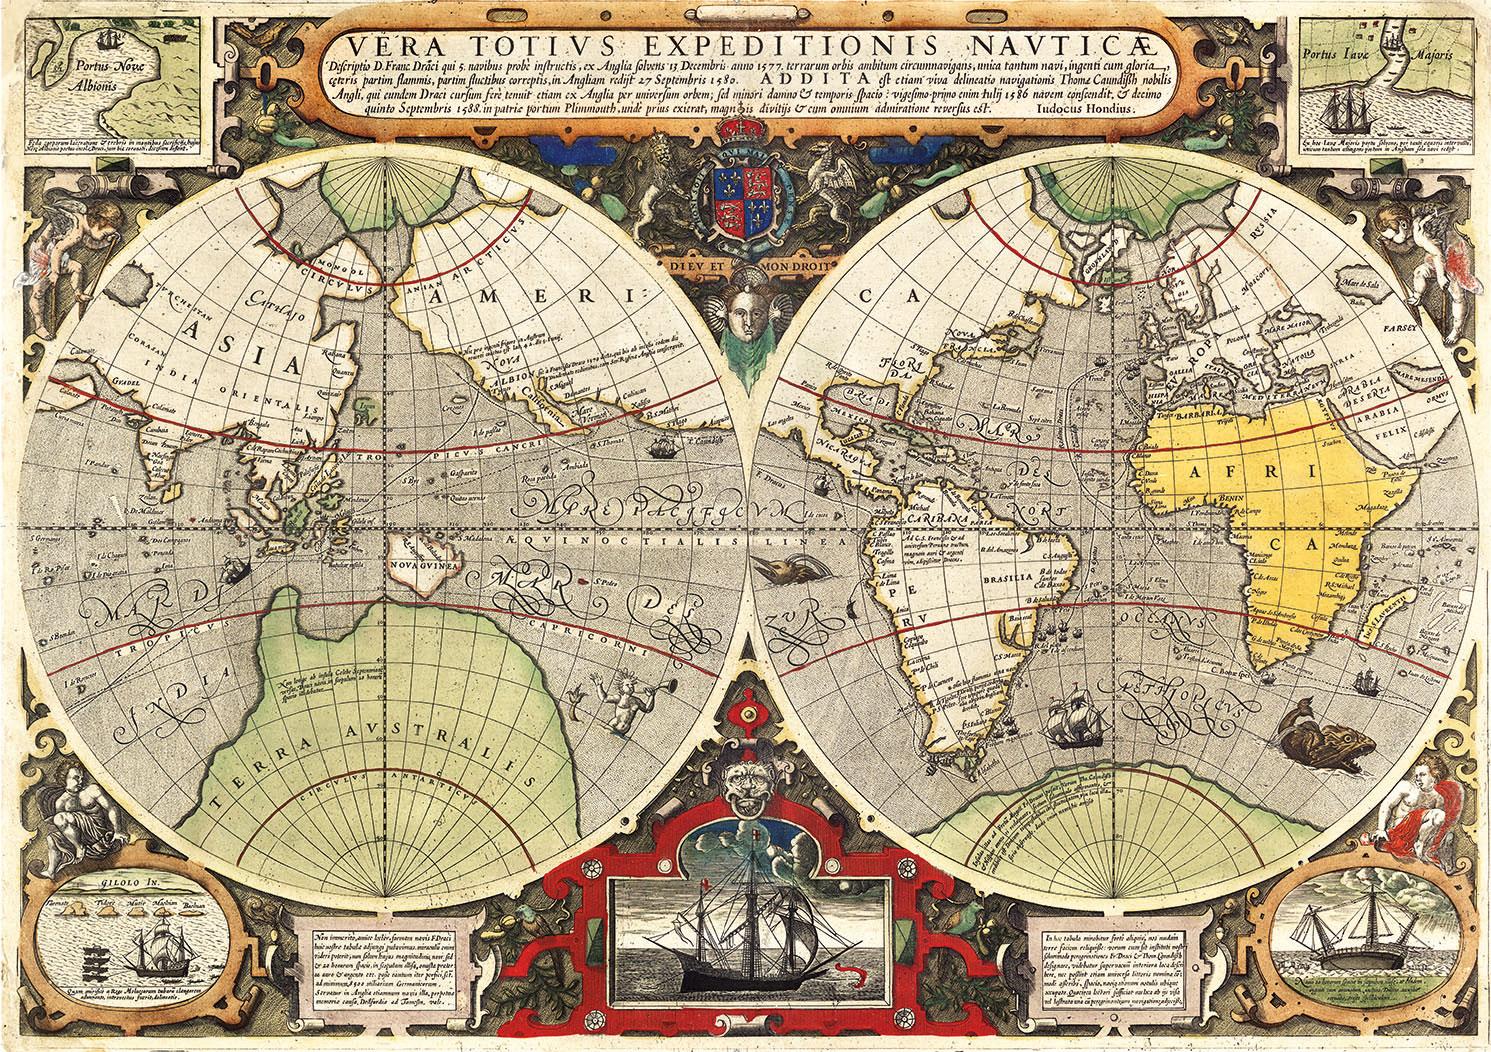 Clementoni Antique Nautical Map High Quality Jigsaw Puzzle (6000 Pieces)